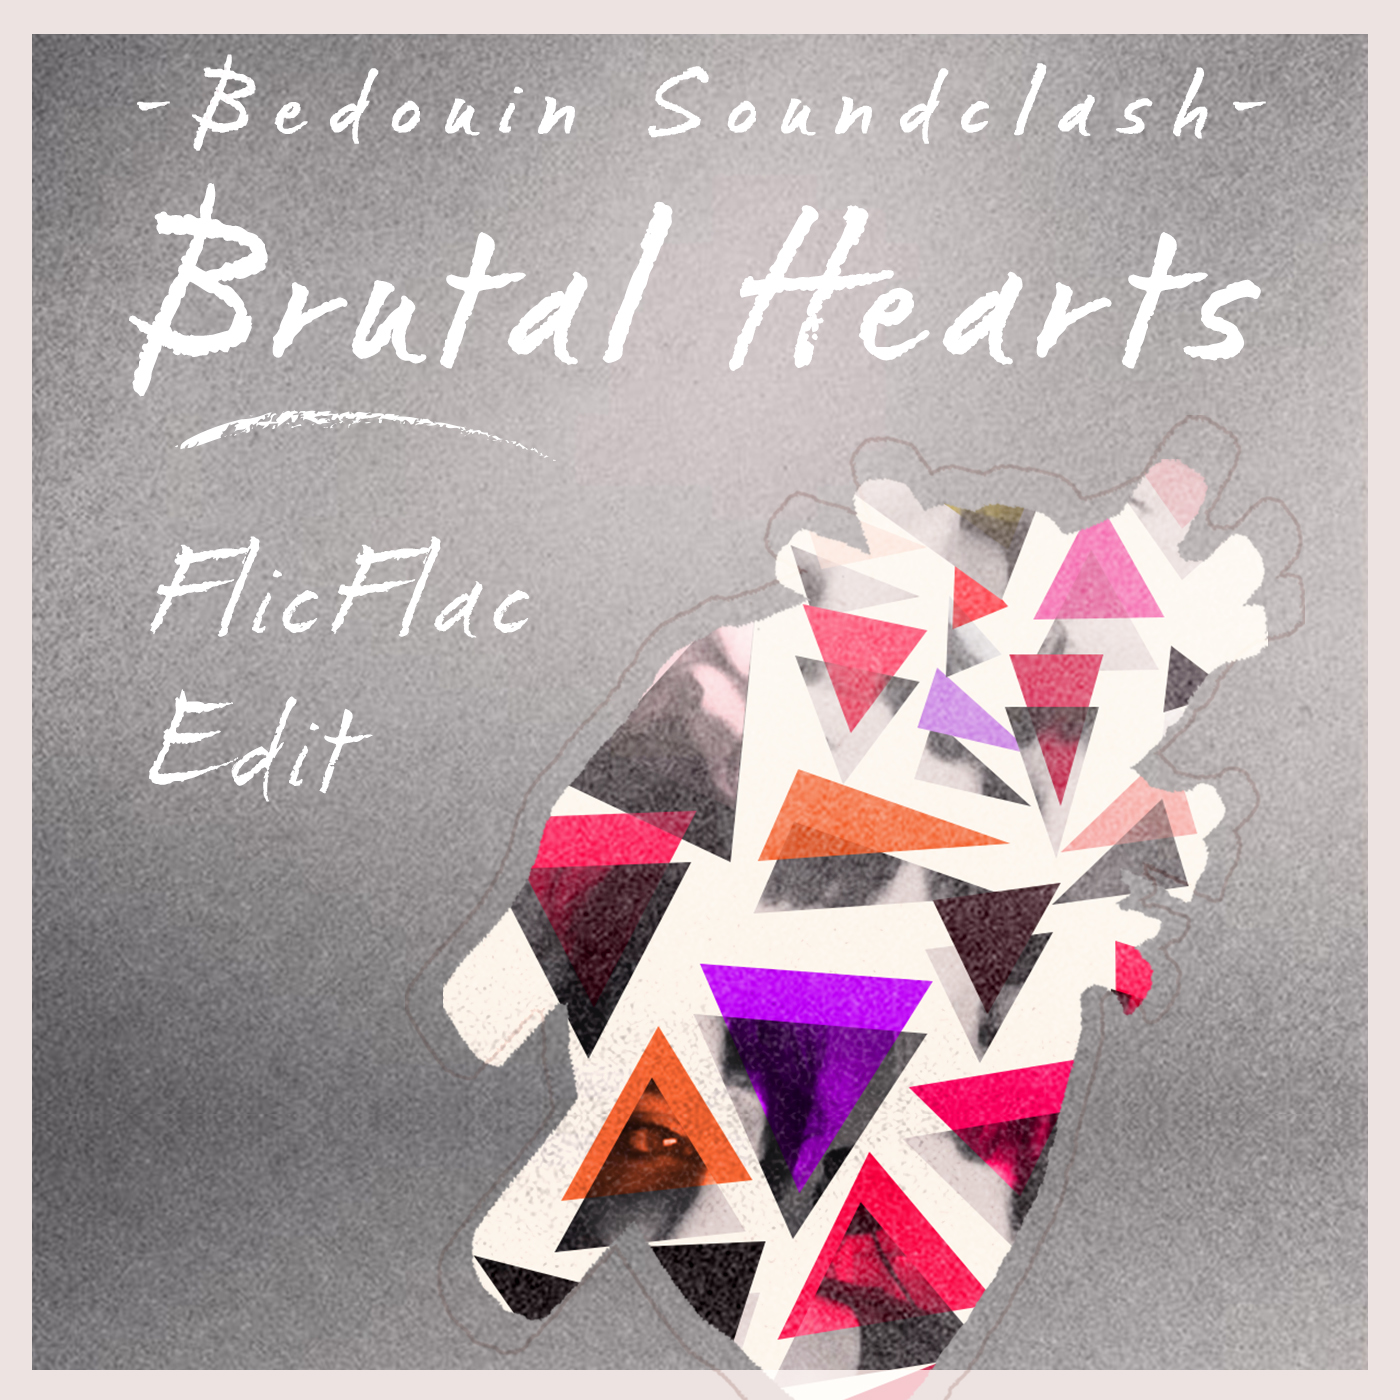 Brutal Hearts - Flic Flac Edit